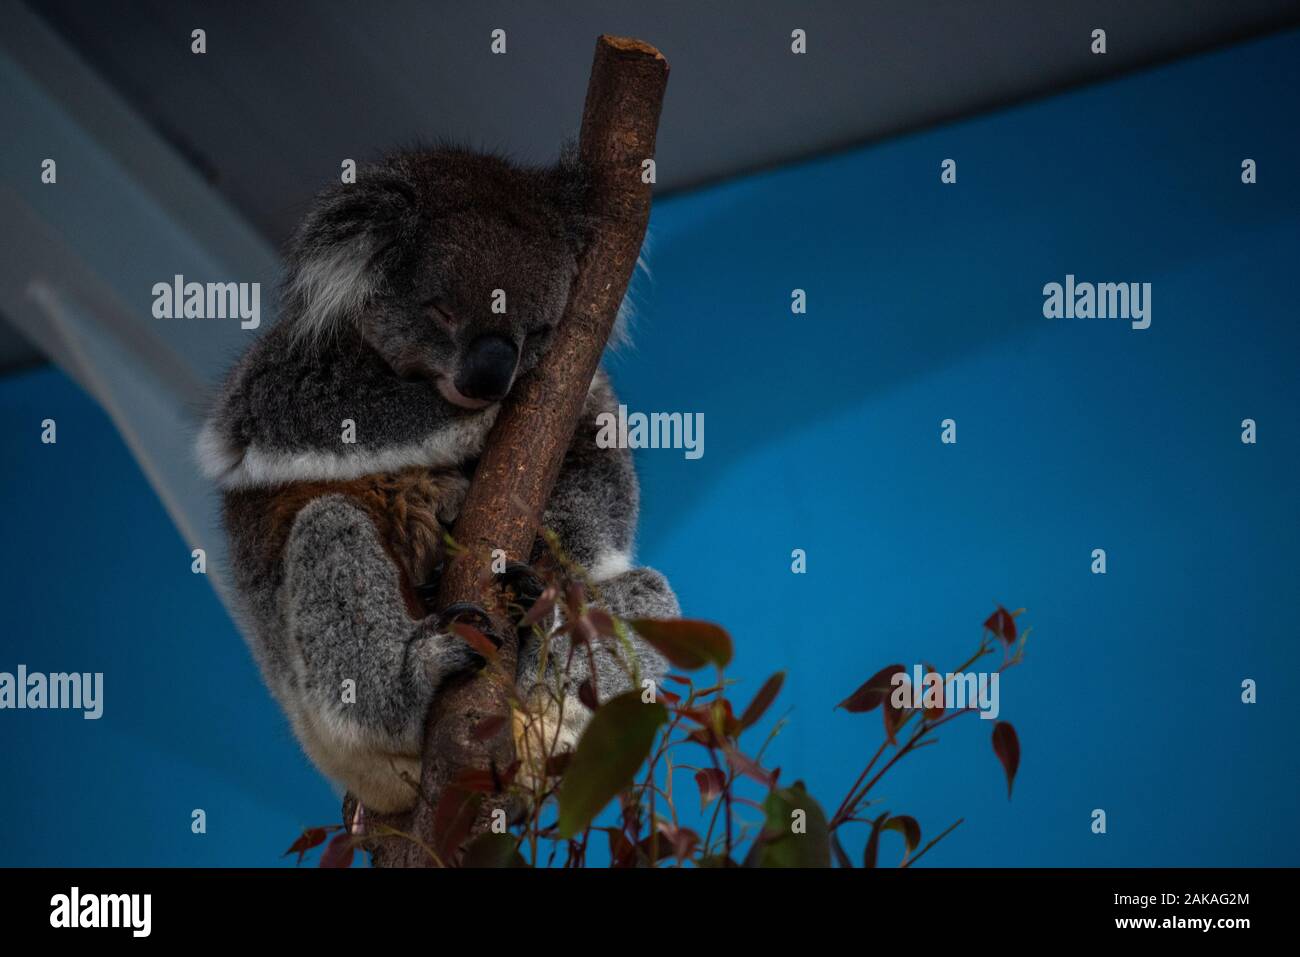 A koala bear at rest in a tree Stock Photo